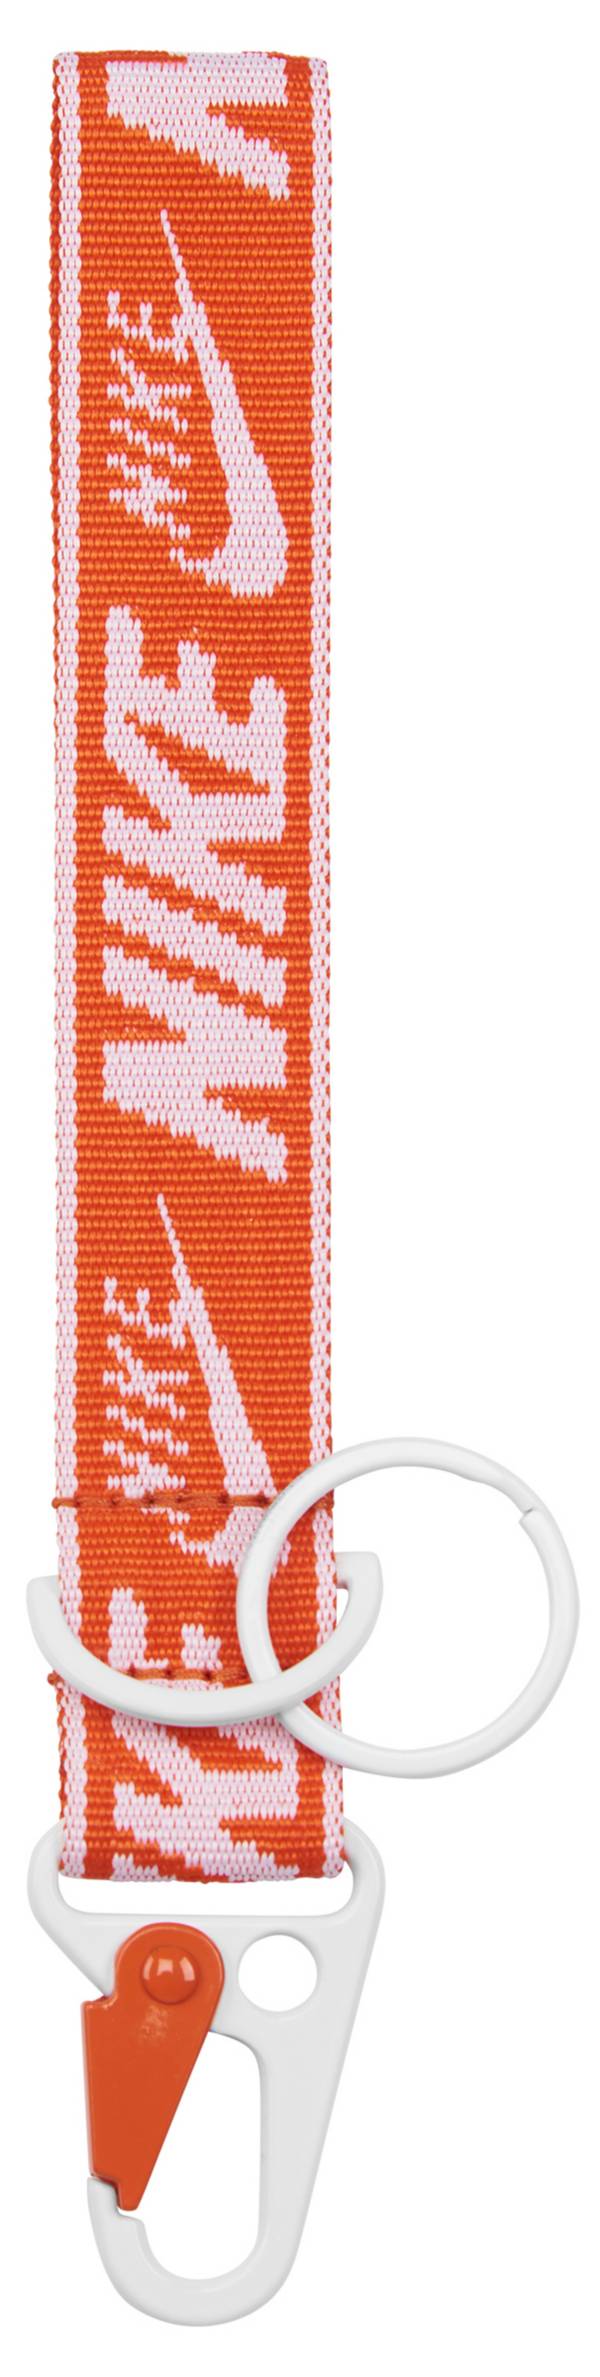 Nike Lanyard with ID Badge and Zipper